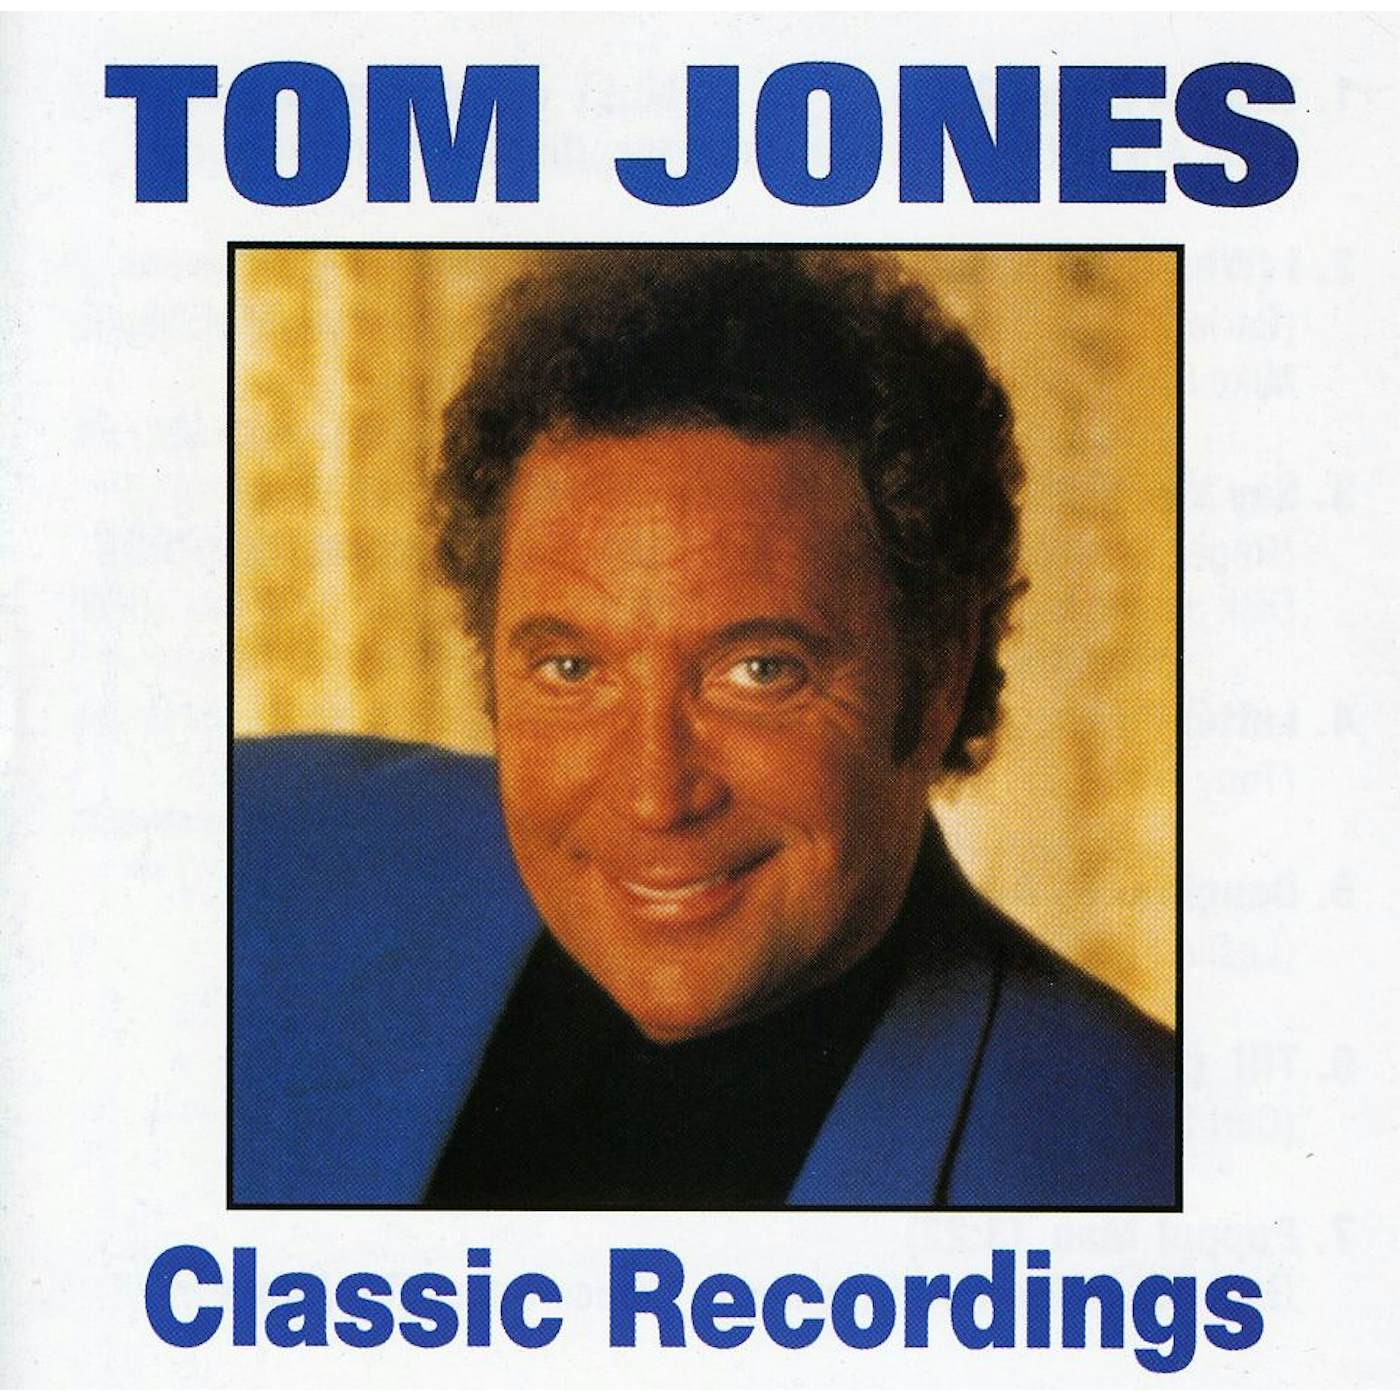 Tom Jones CLASSIC RECORDINGS CD